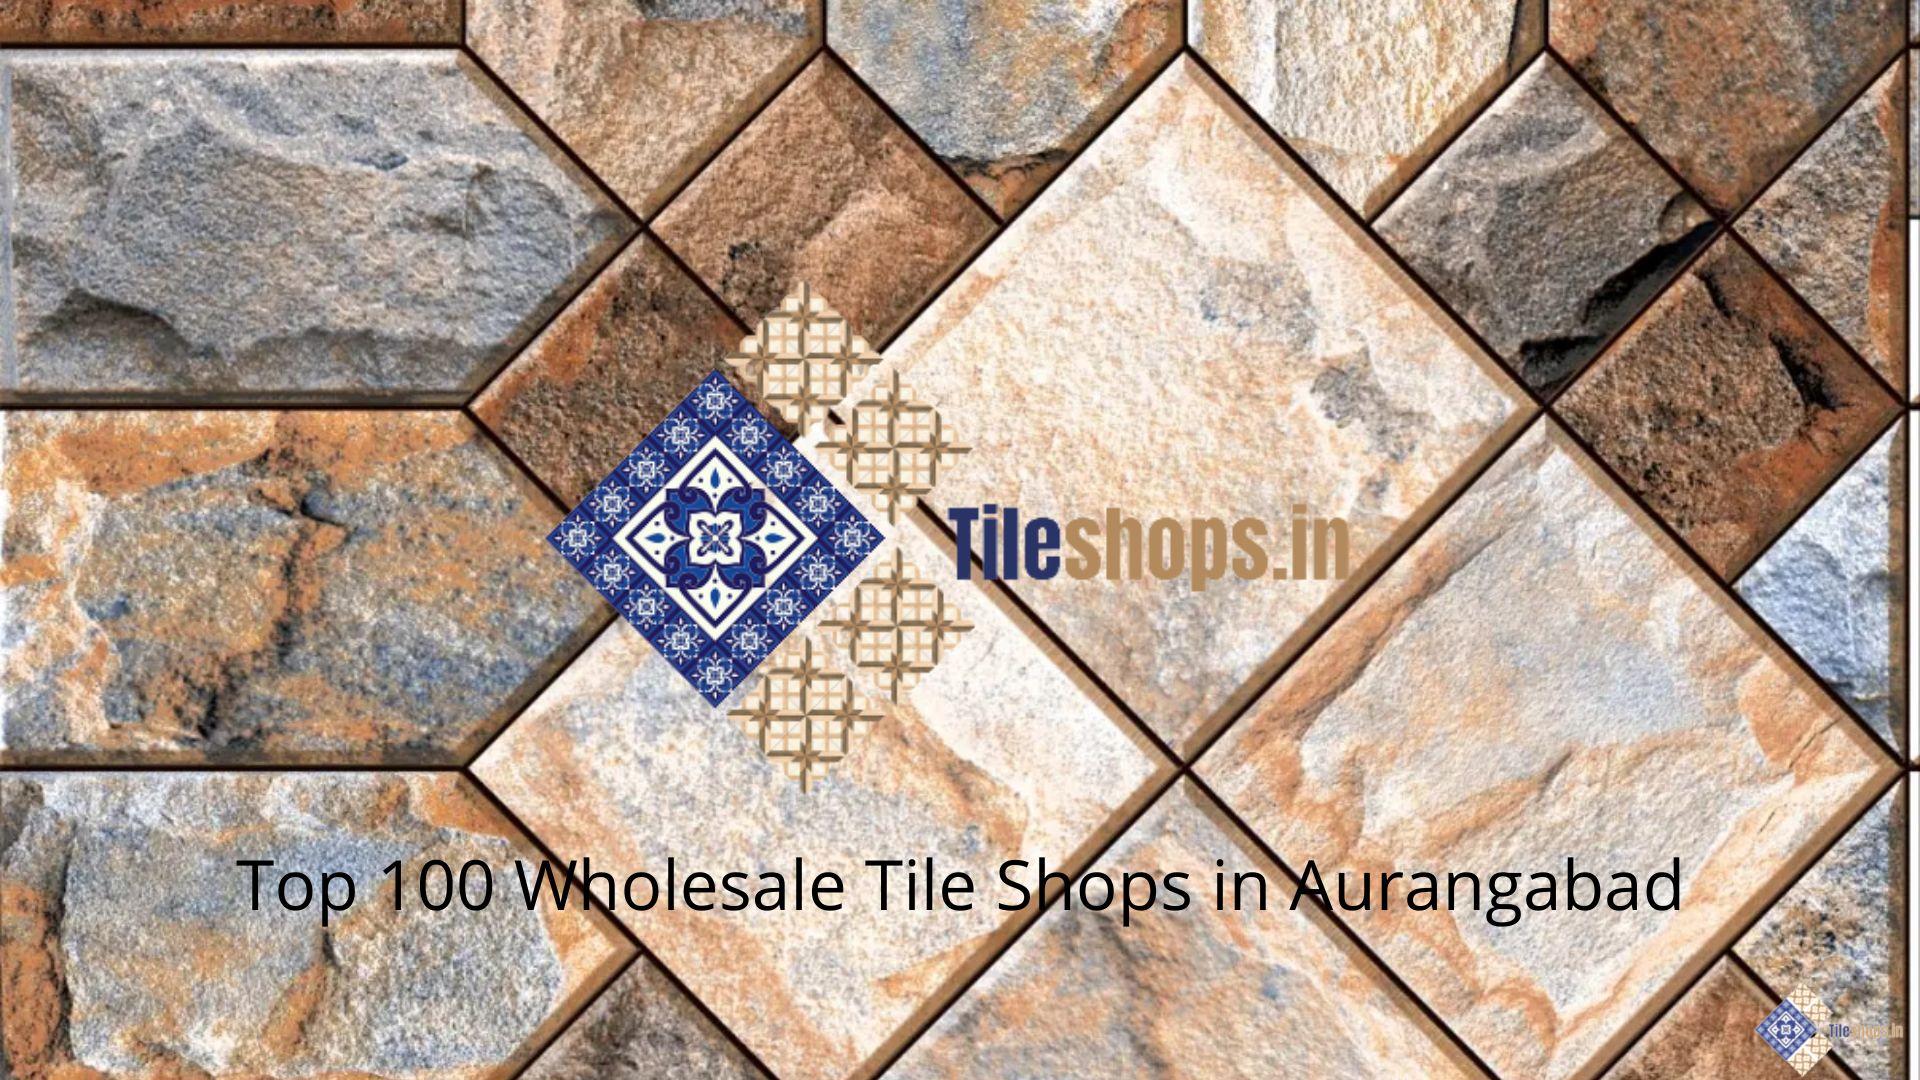 Top 100 Wholesale Tile Shops in Aurangabad